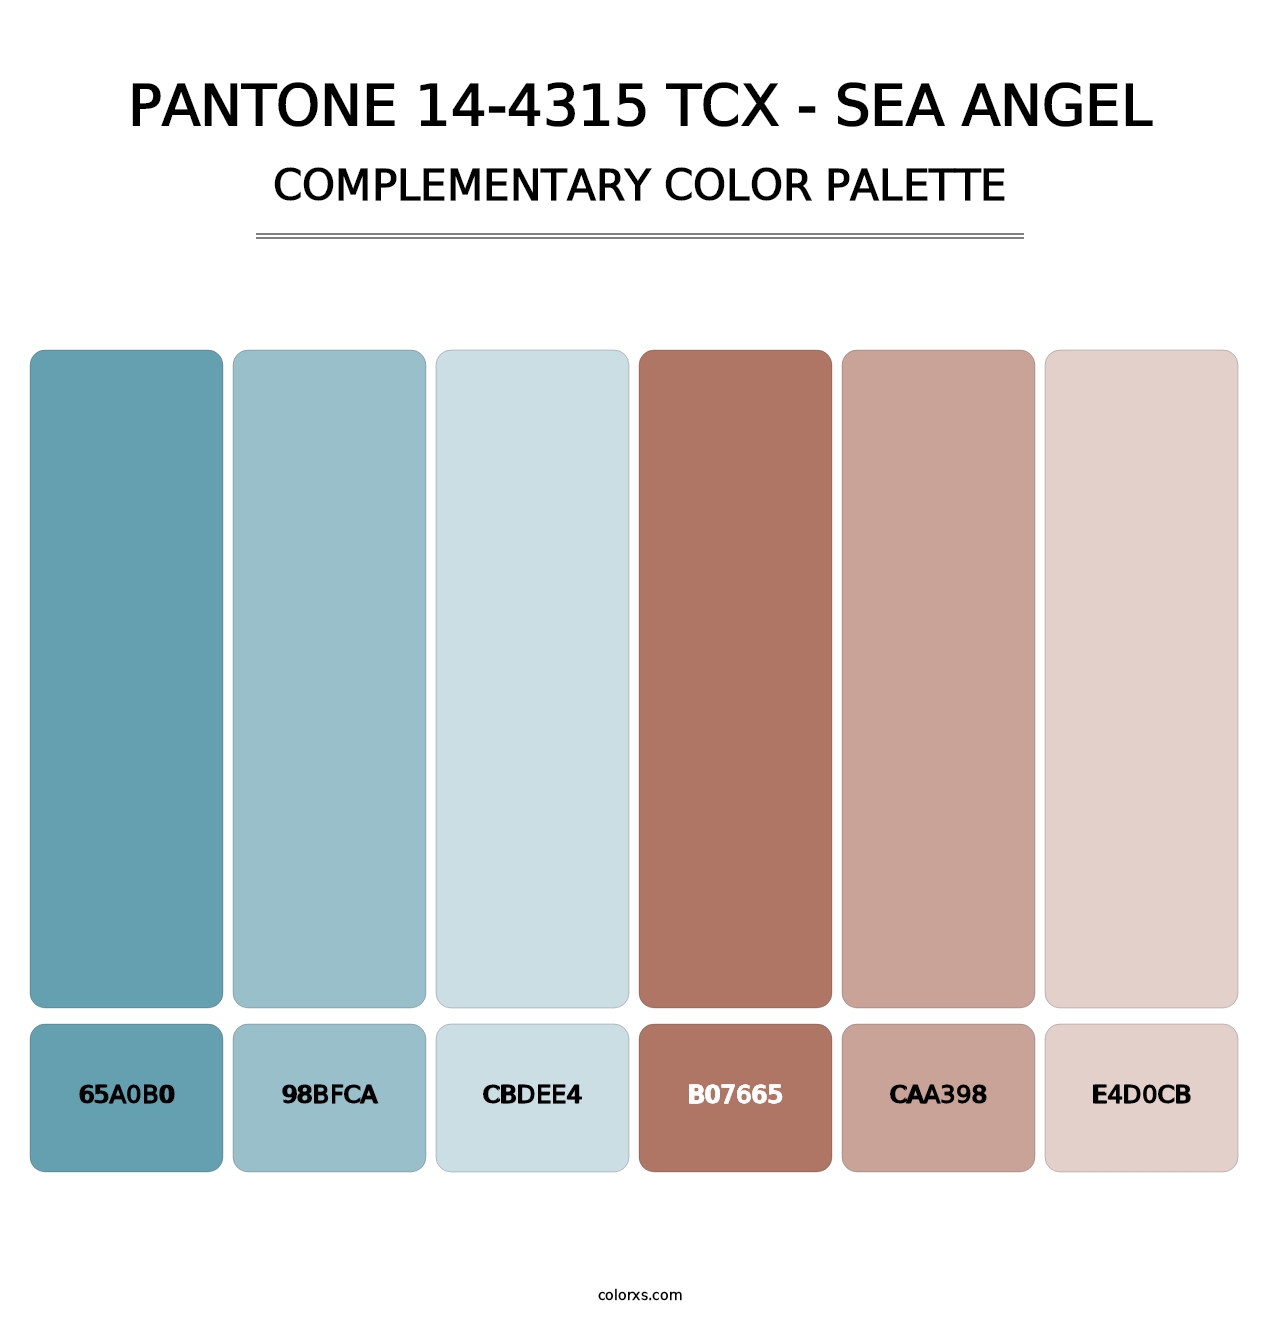 PANTONE 14-4315 TCX - Sea Angel - Complementary Color Palette